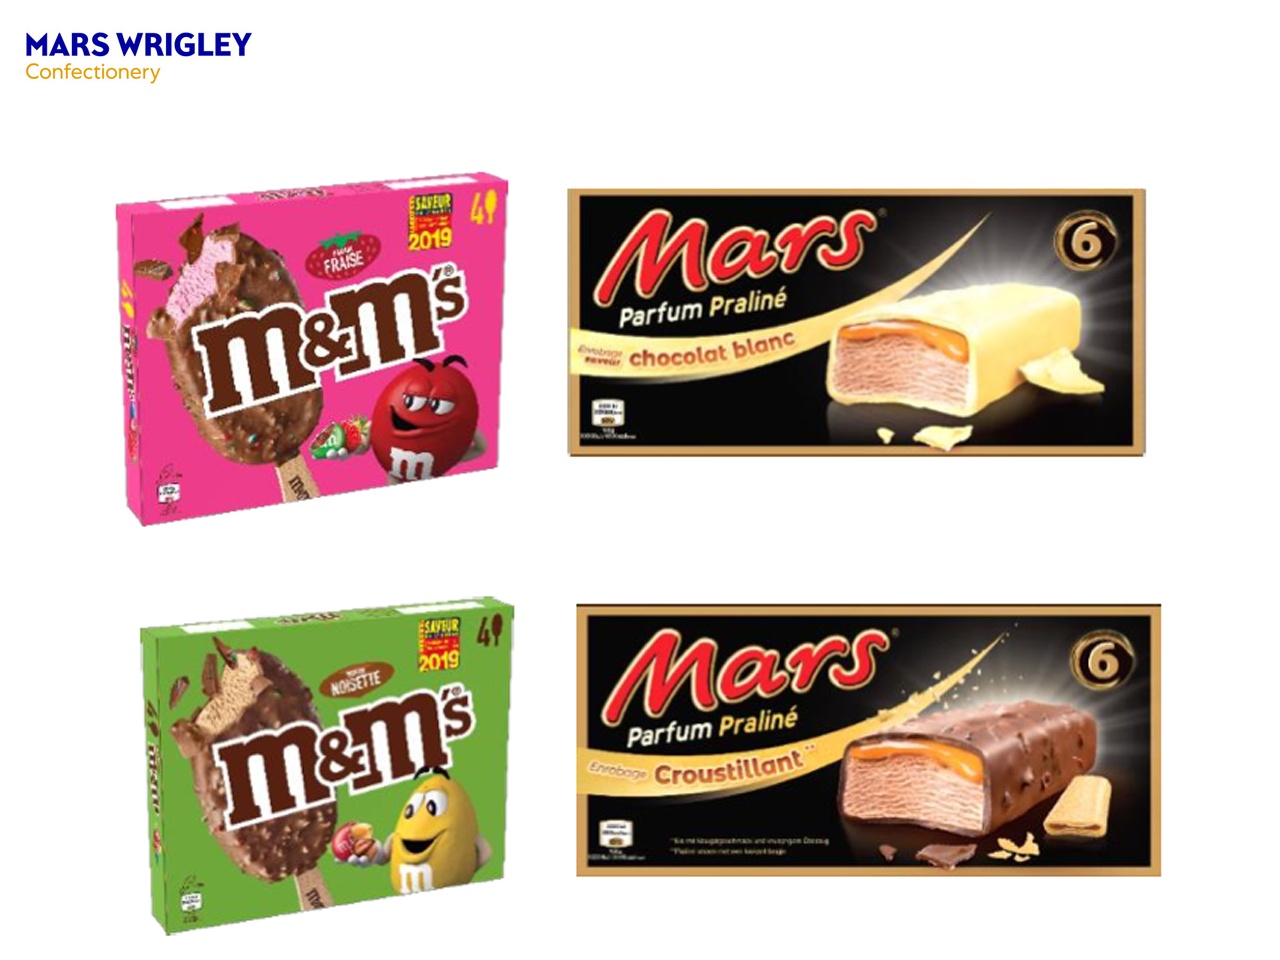 Mars Wrigley Confectionery France innove sur le marché des glaces